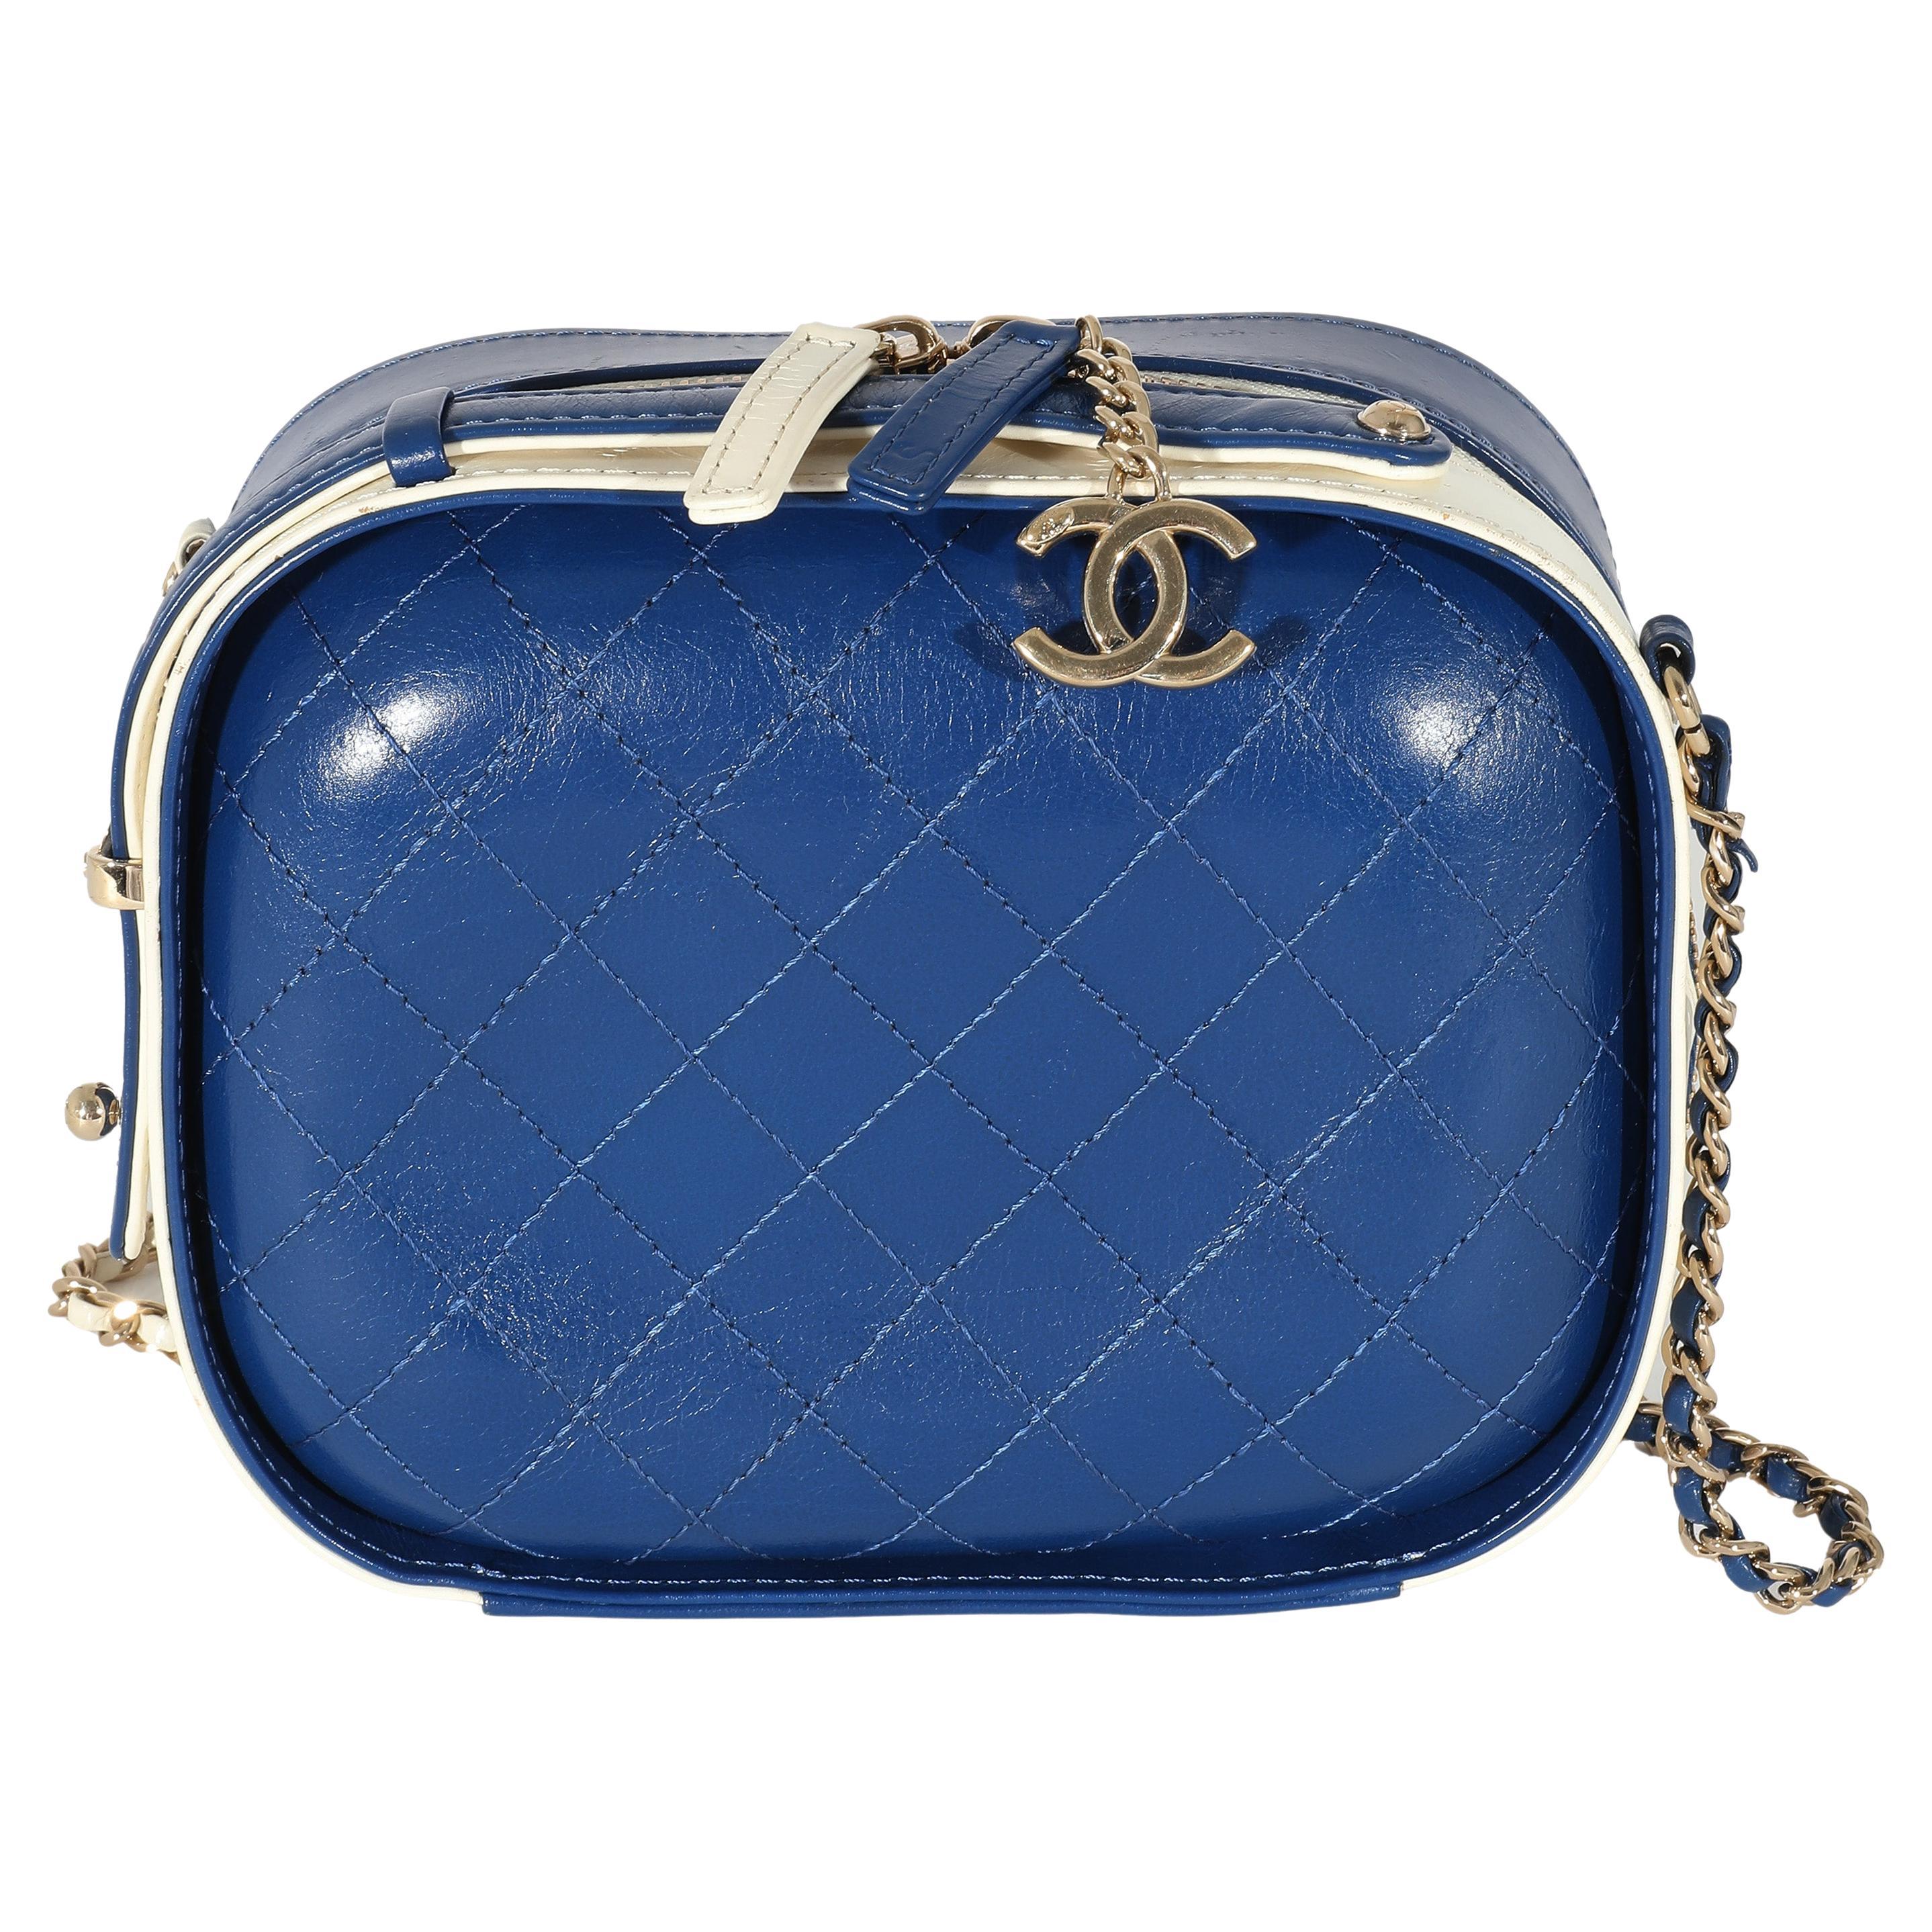 Chanel White Vanity Bag - 11 For Sale on 1stDibs